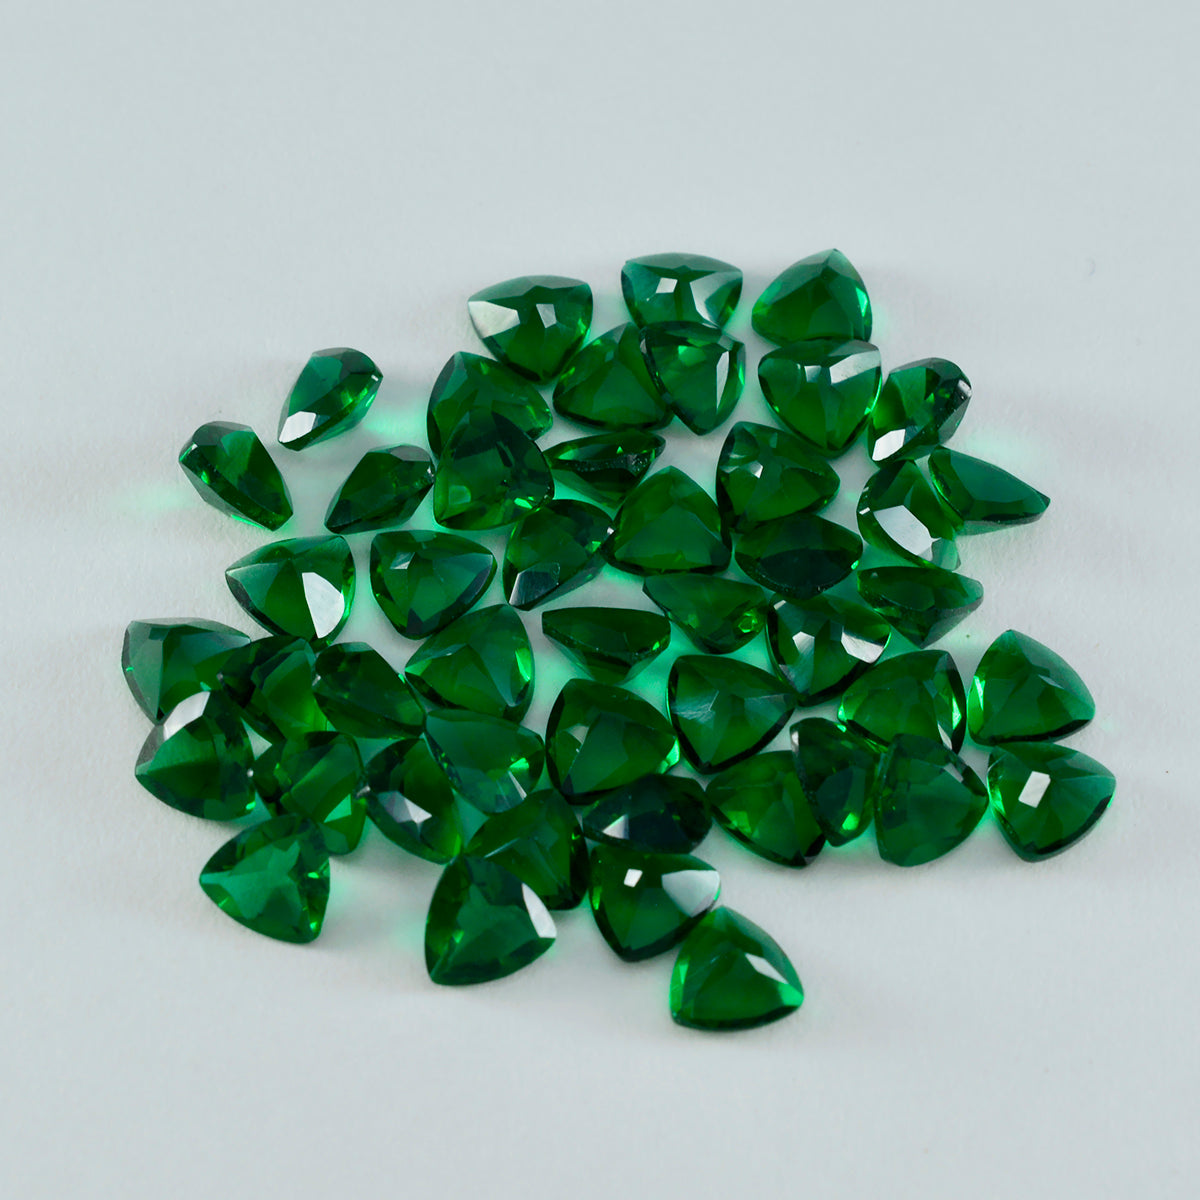 Riyogems 1PC Green Emerald CZ Faceted 6x6 mm Trillion Shape awesome Quality Gemstone